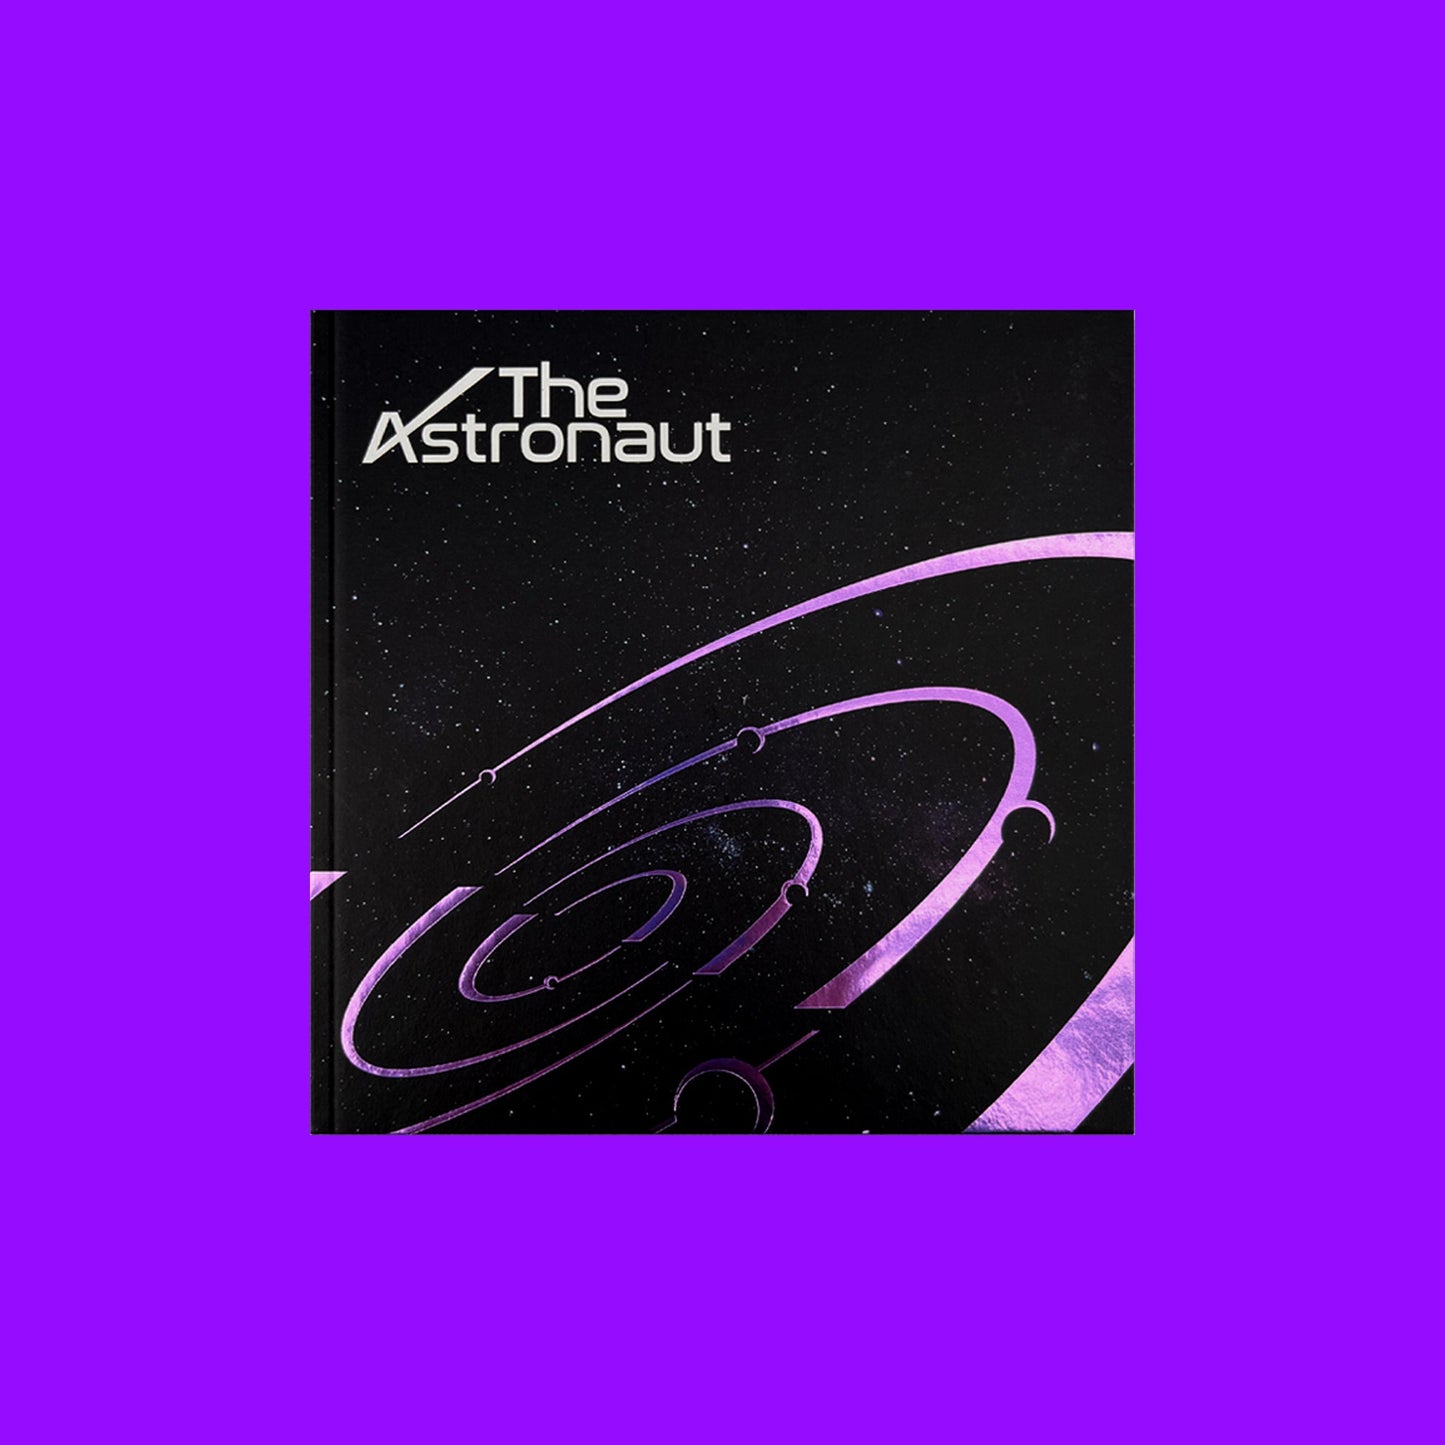 JIN (BTS) SOLO SINGLE ALBUM 'THE ASTRONAUT' VERSION 01 COVER